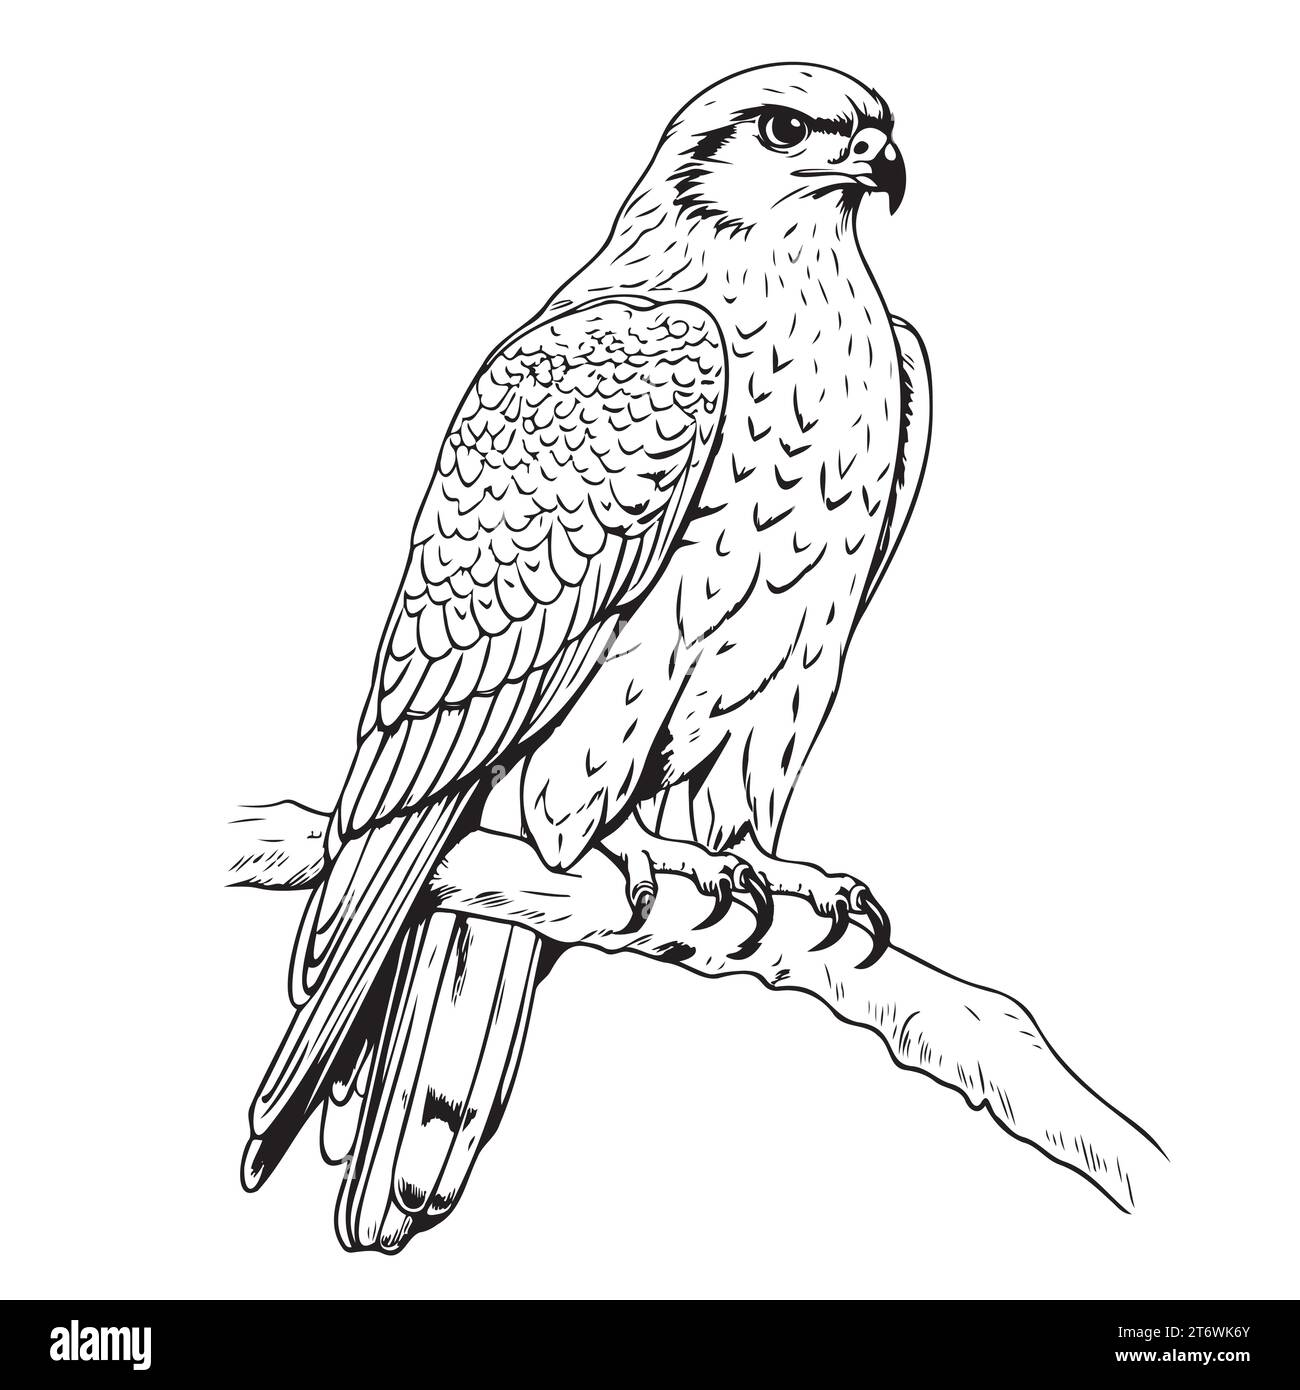 Eagle PNG image, free download transparent image download, size: 1024x768px